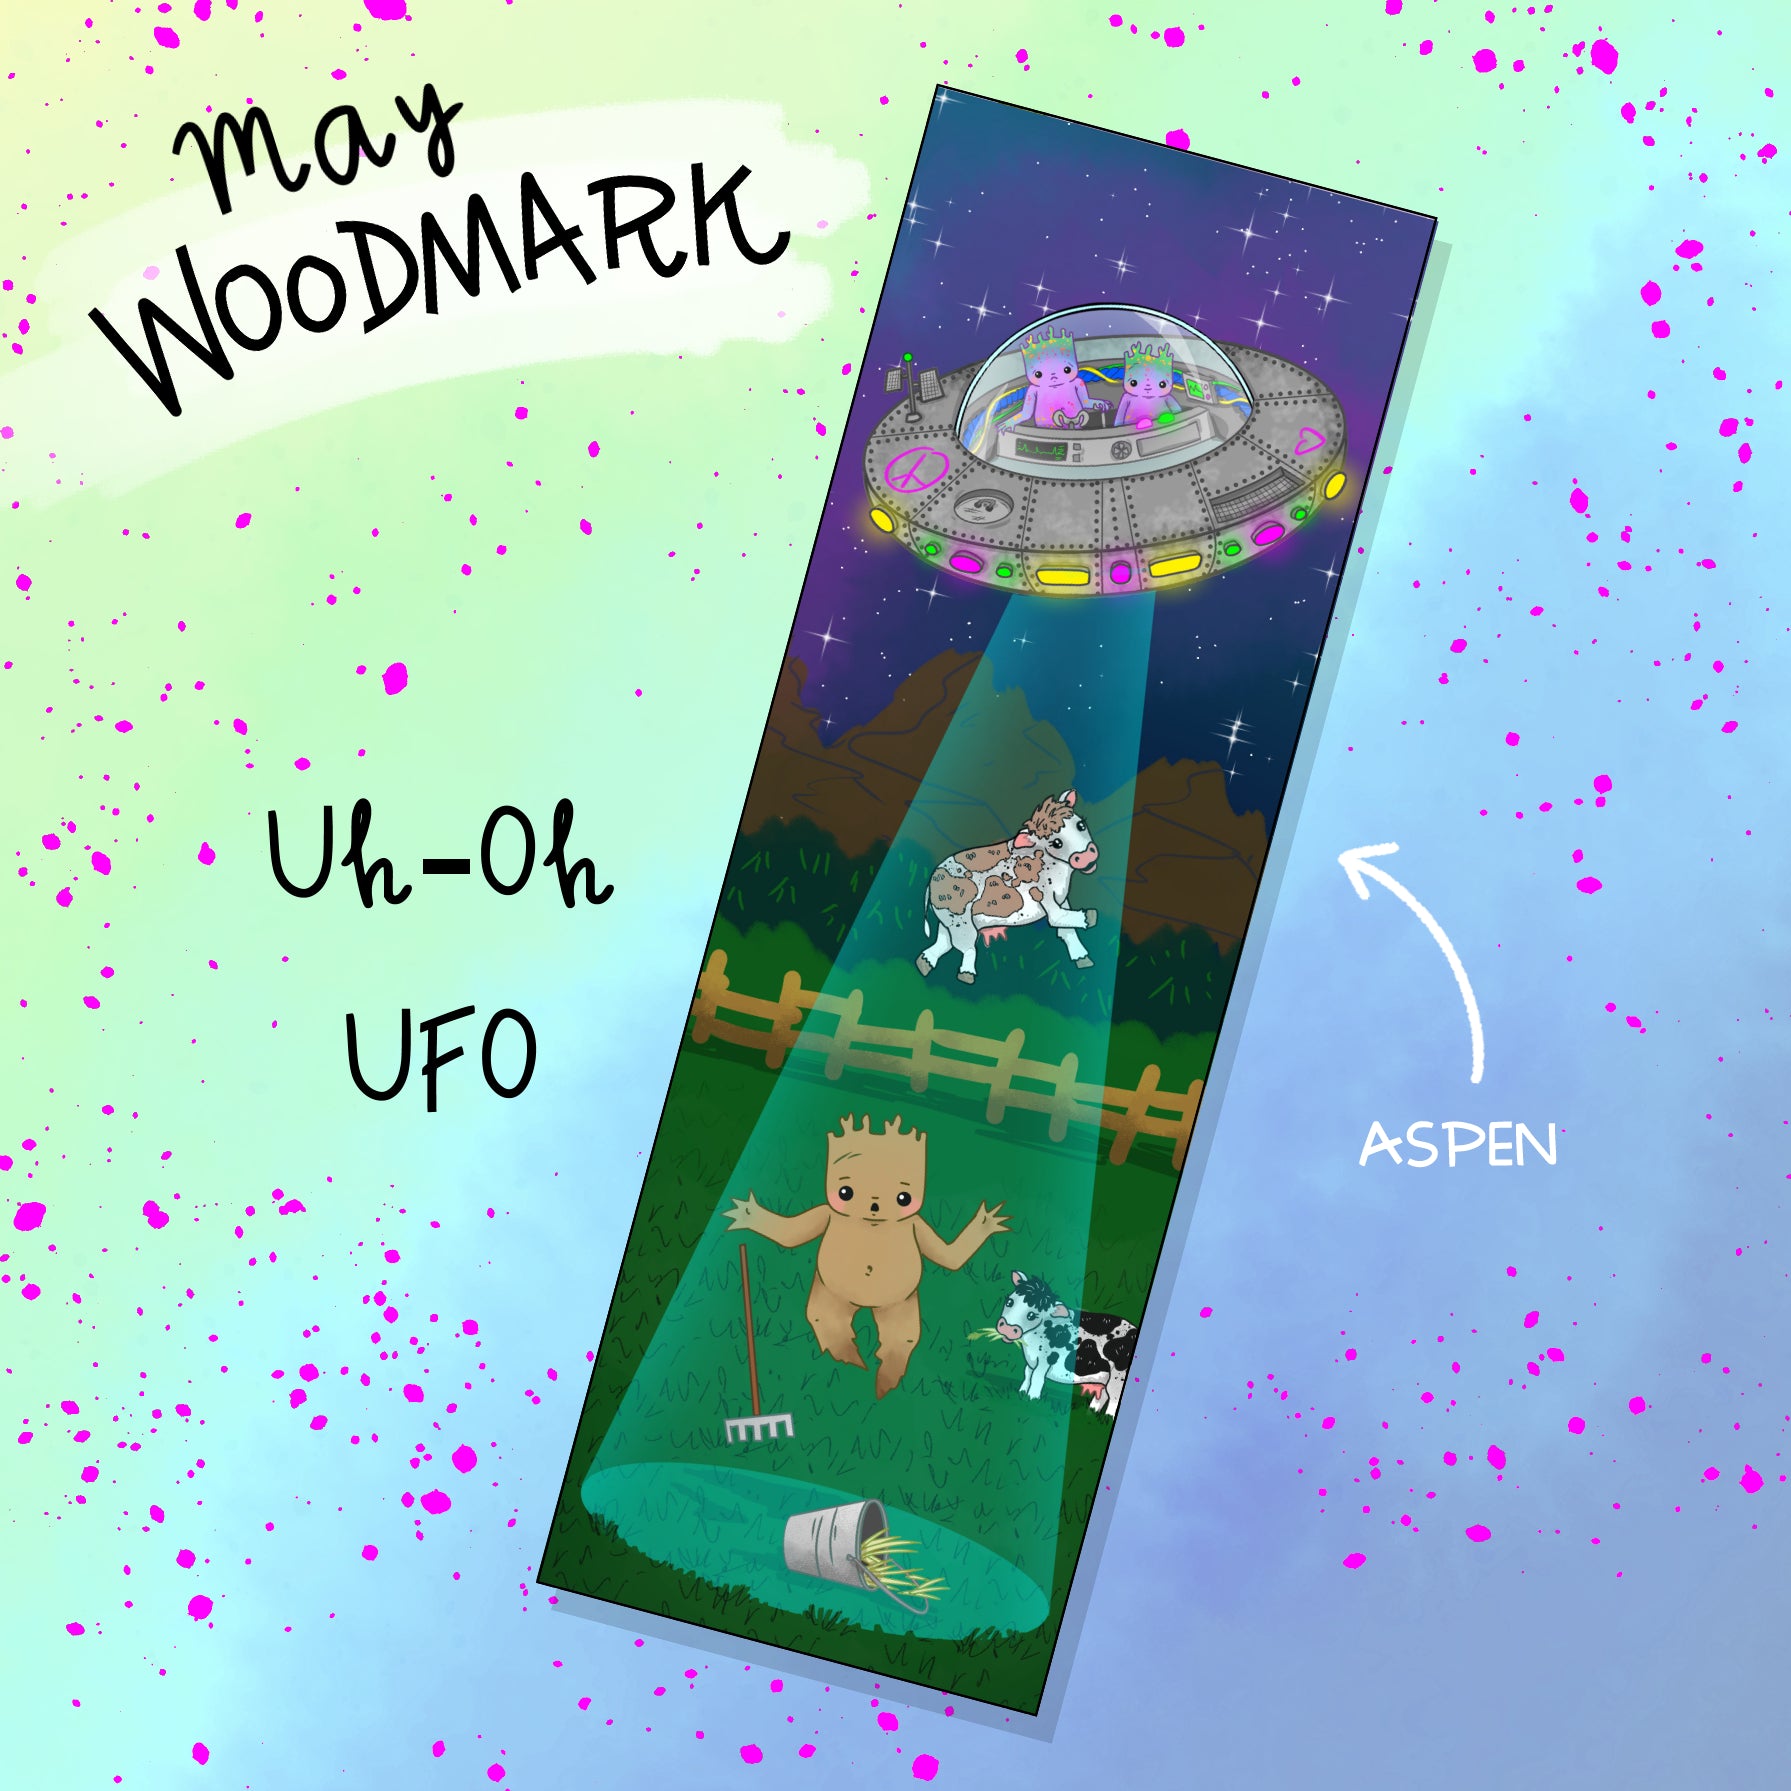 Uh-Oh UFO Woodmark